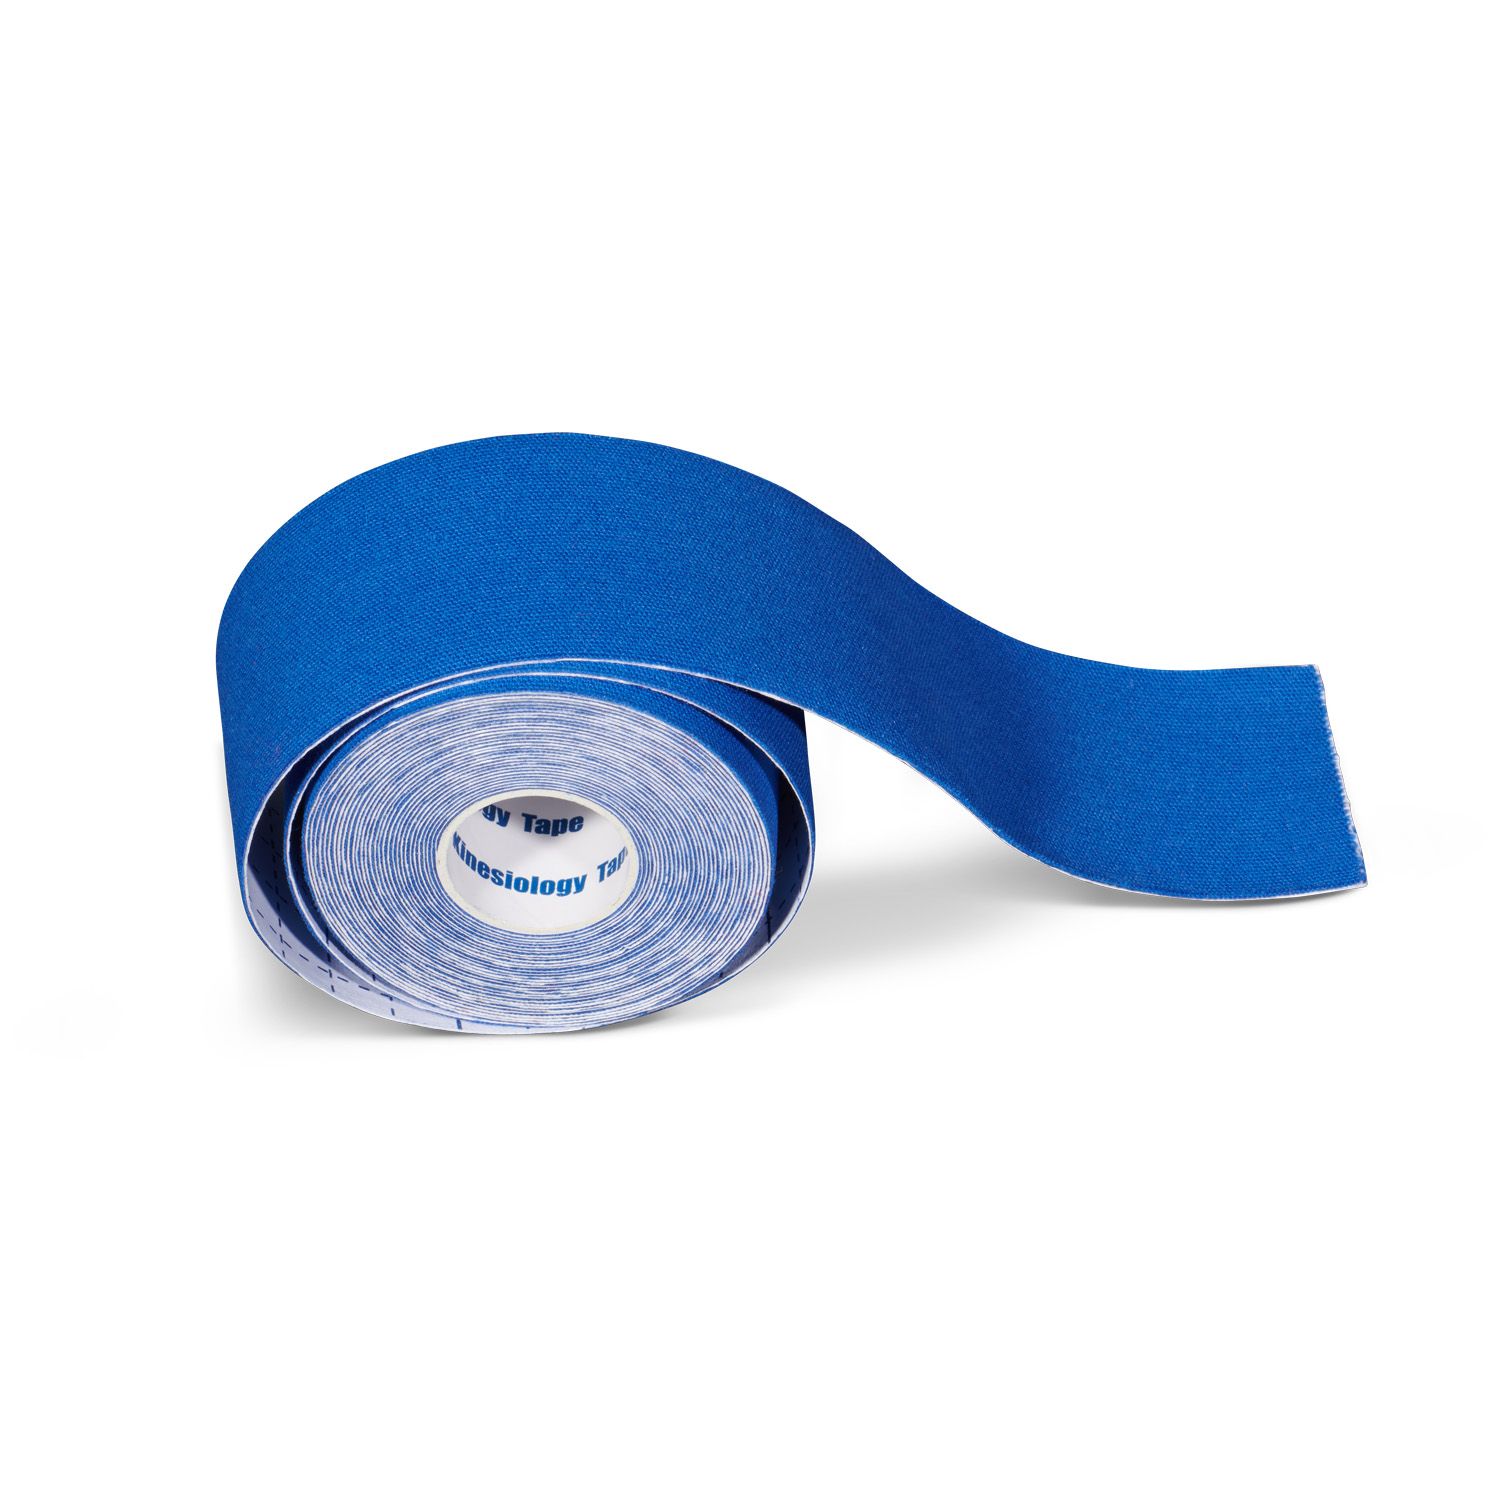 Kinesiology tape 12 rolls plus 3 rolls for free dark blue